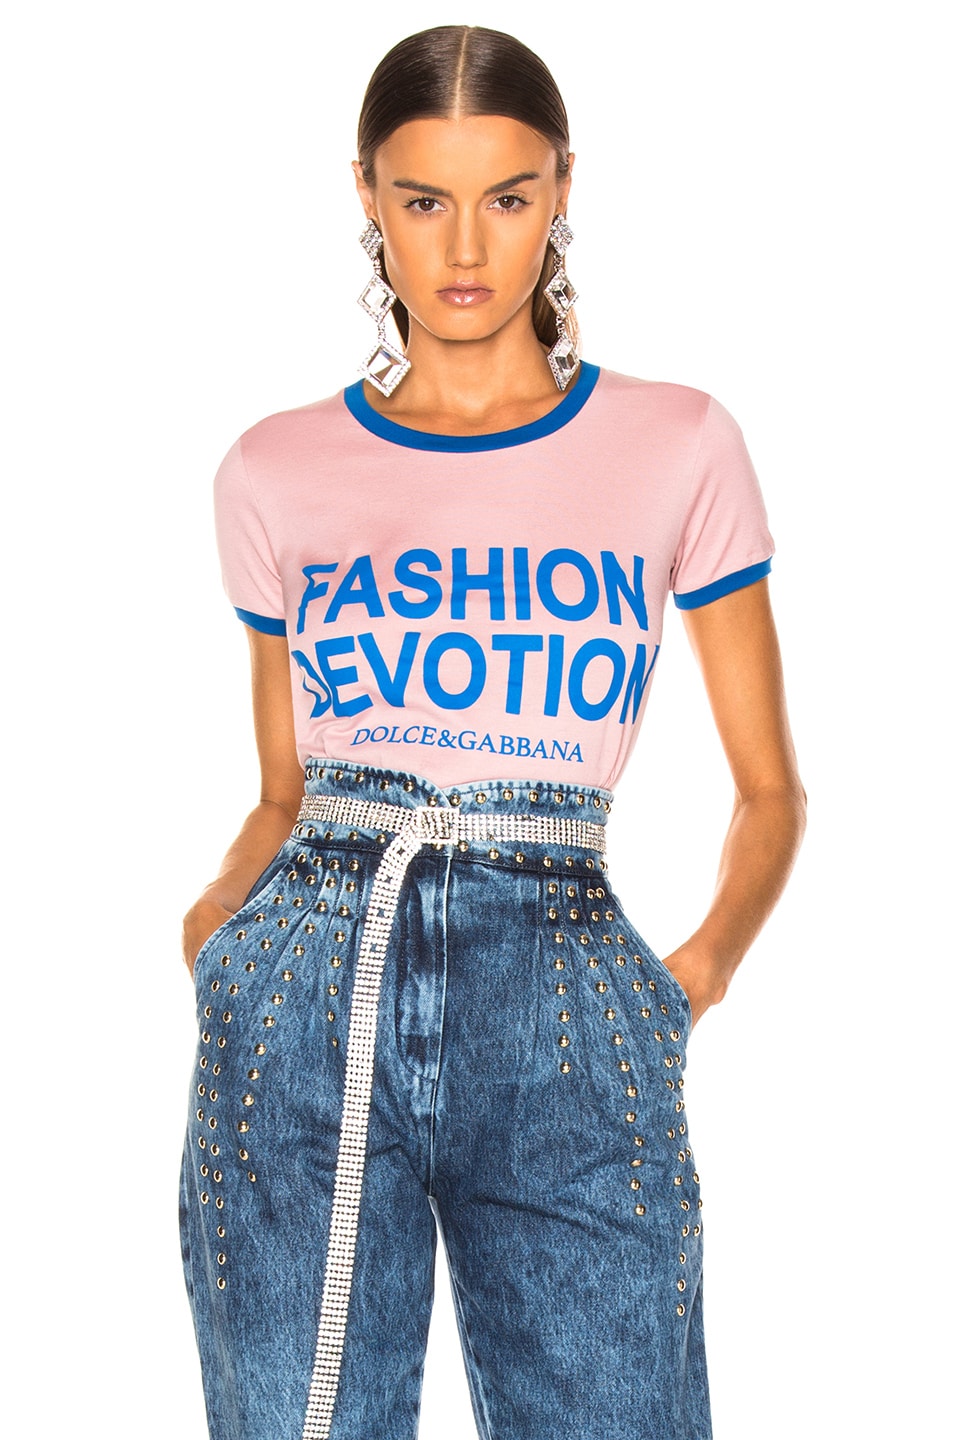 Image 1 of Dolce & Gabbana Fashion Devotion Ringer Tee in Light Pink & Blue